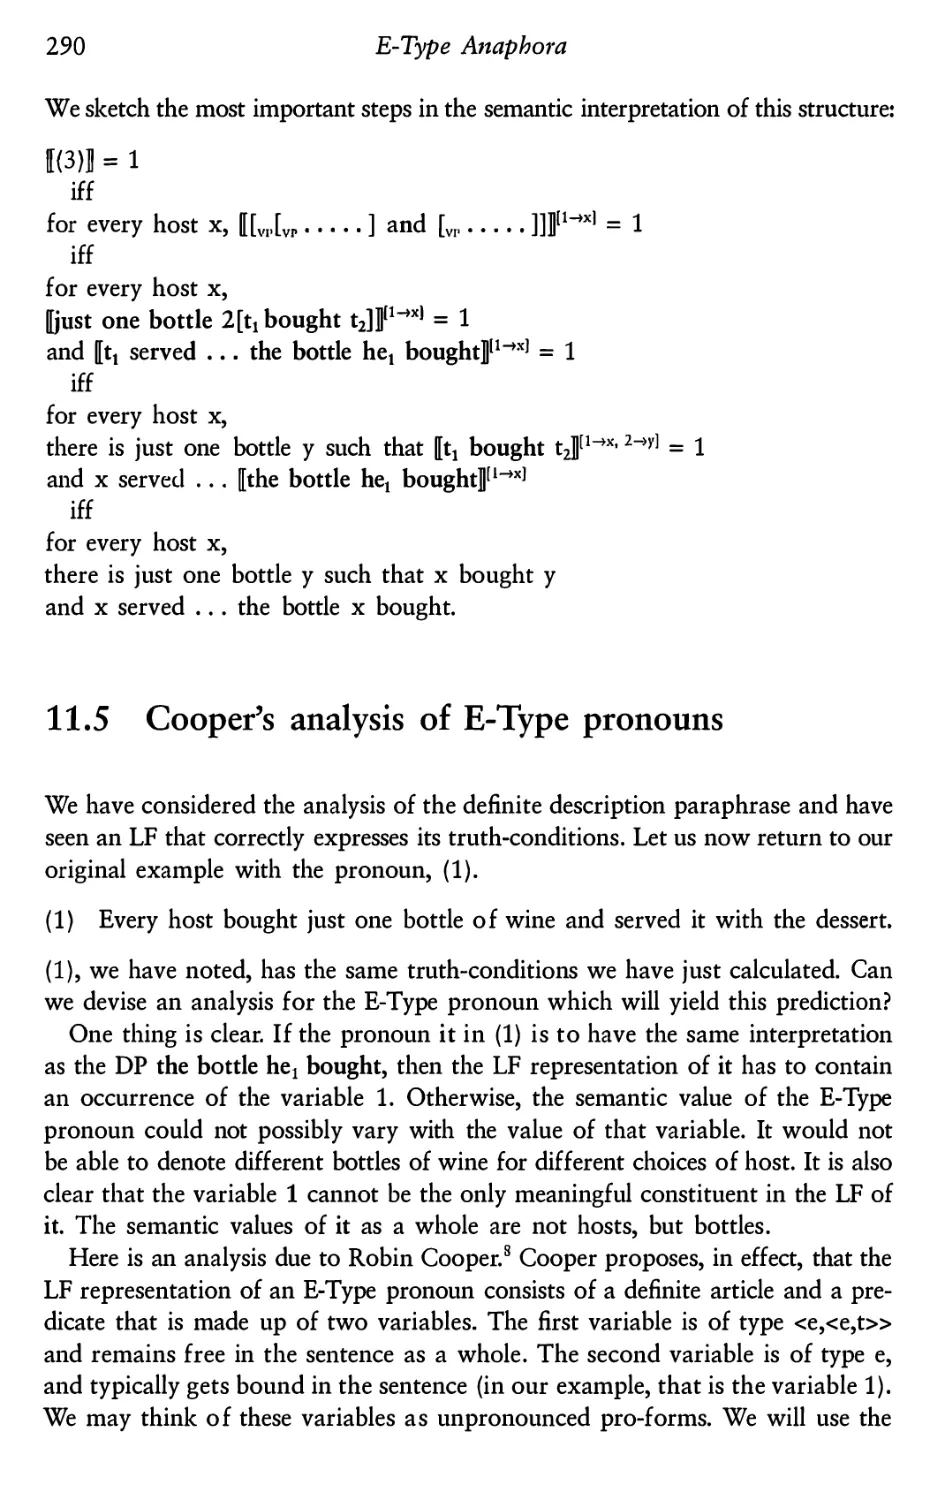 11.5 Cooper’s analysis of E-Type pronouns